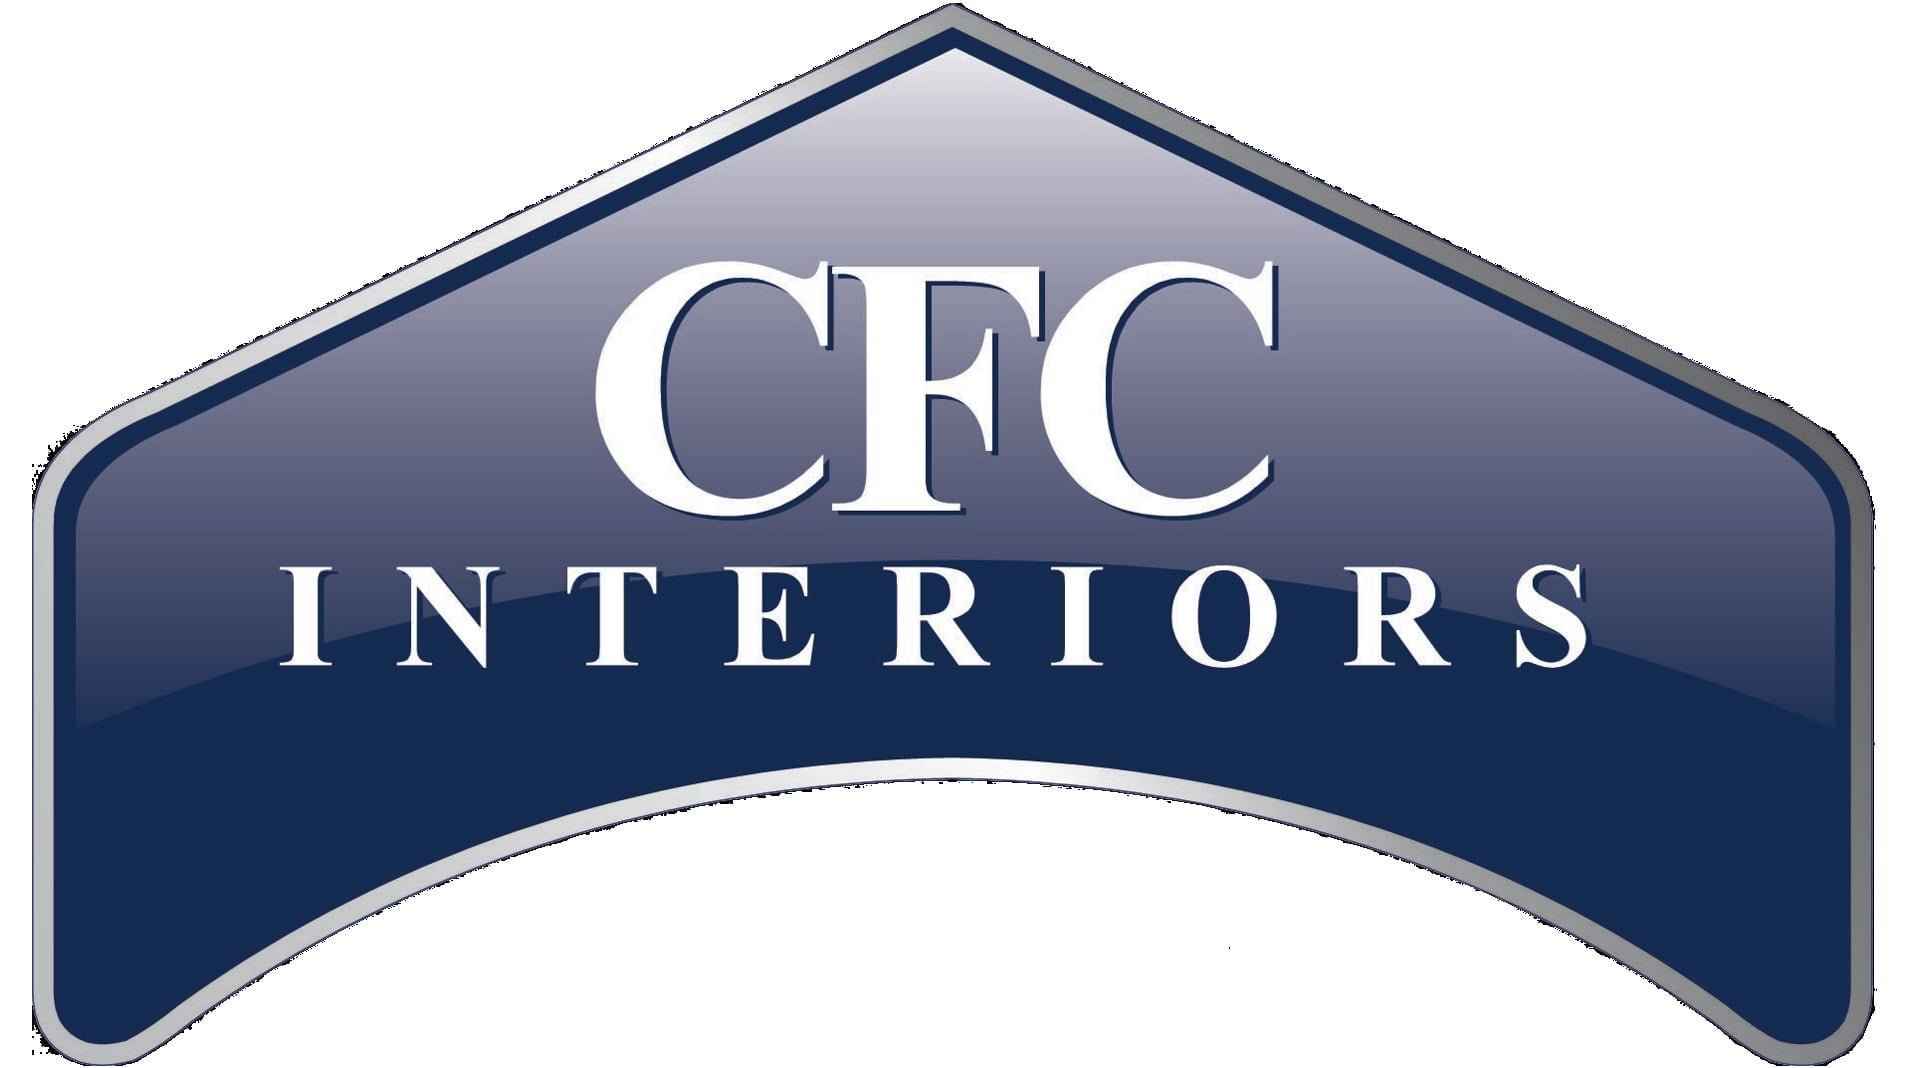 C F C Interiors (Cookstown) - Wood Bros